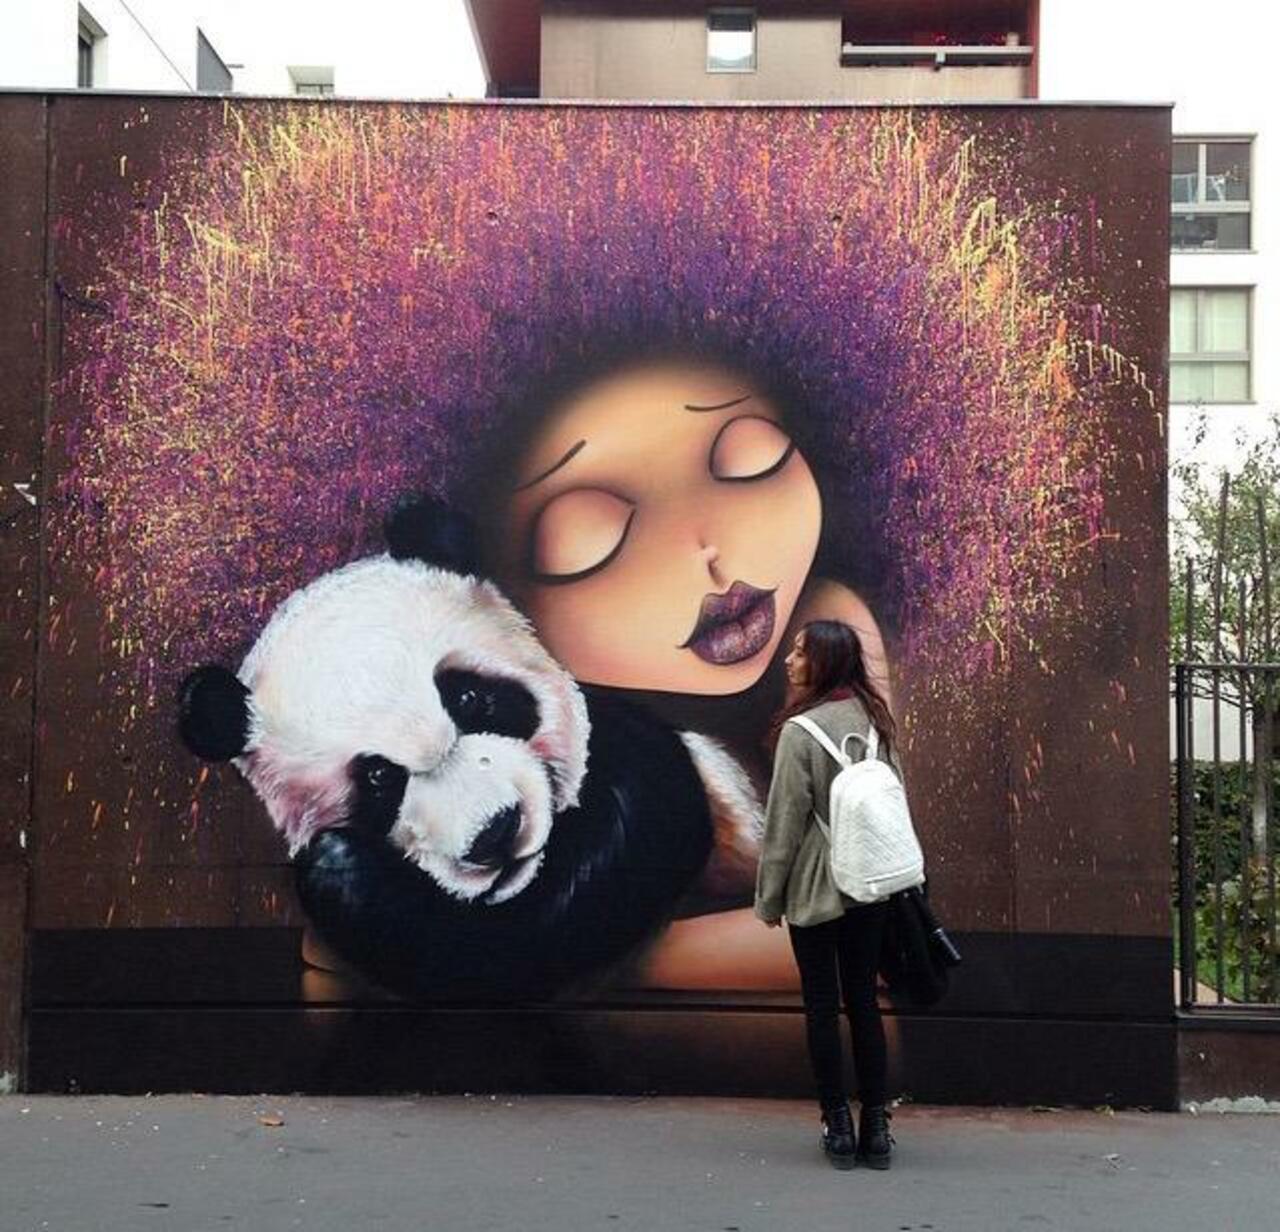 Street Art by VinieGraffiti in Paris 

#art #graffiti #mural #streetart http://t.co/E2ftiDGdTZ googlestreetart chinatoniq